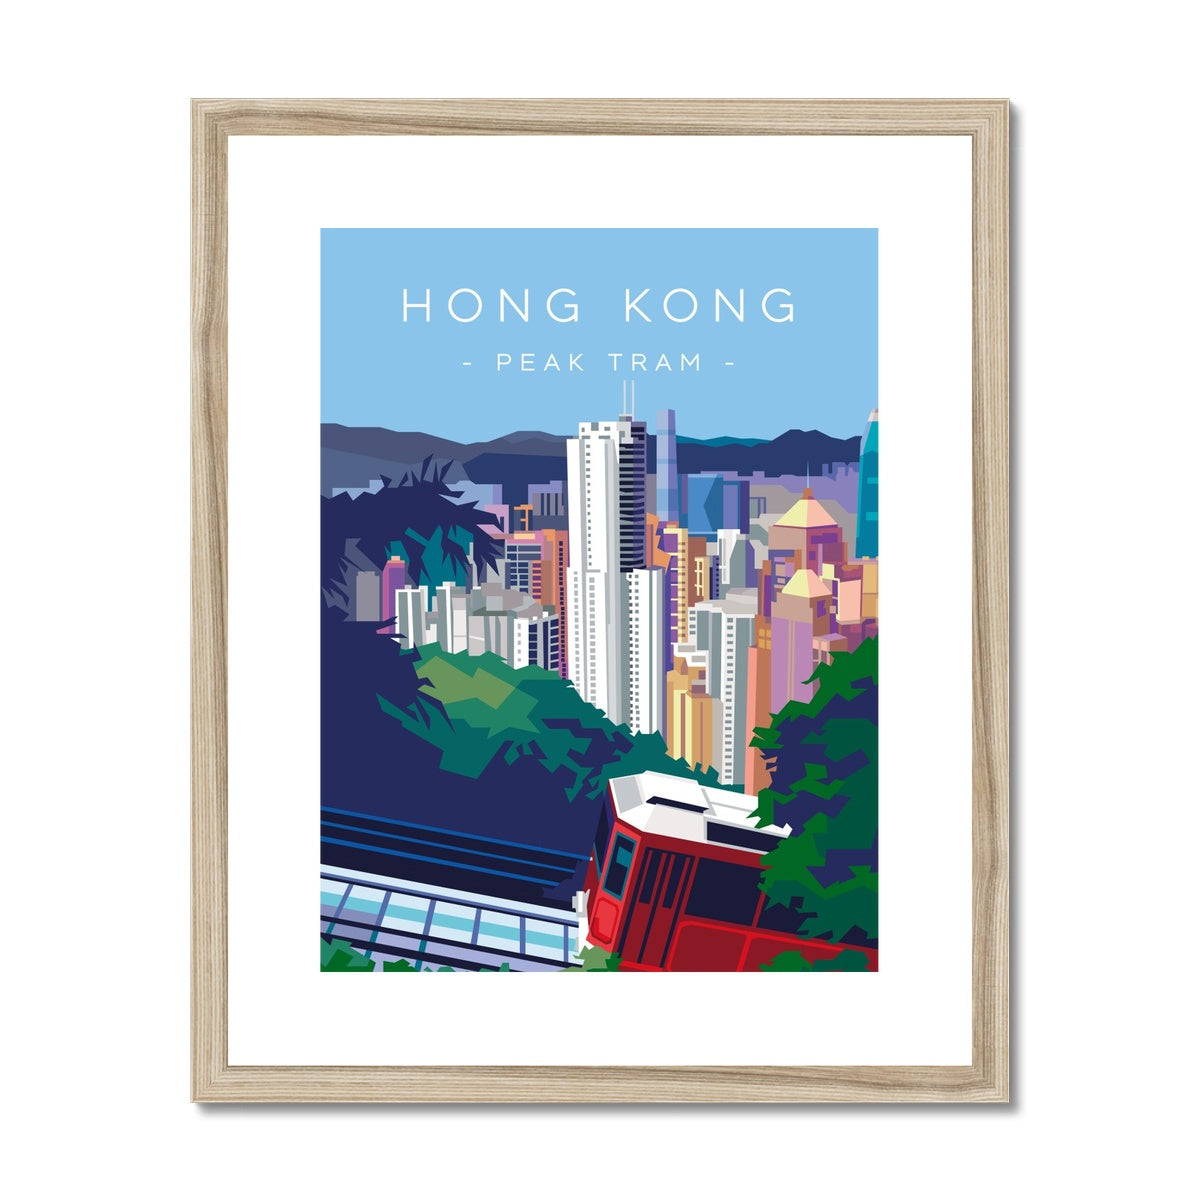 Hong Kong Travel - Peak Tram Framed & Mounted Print